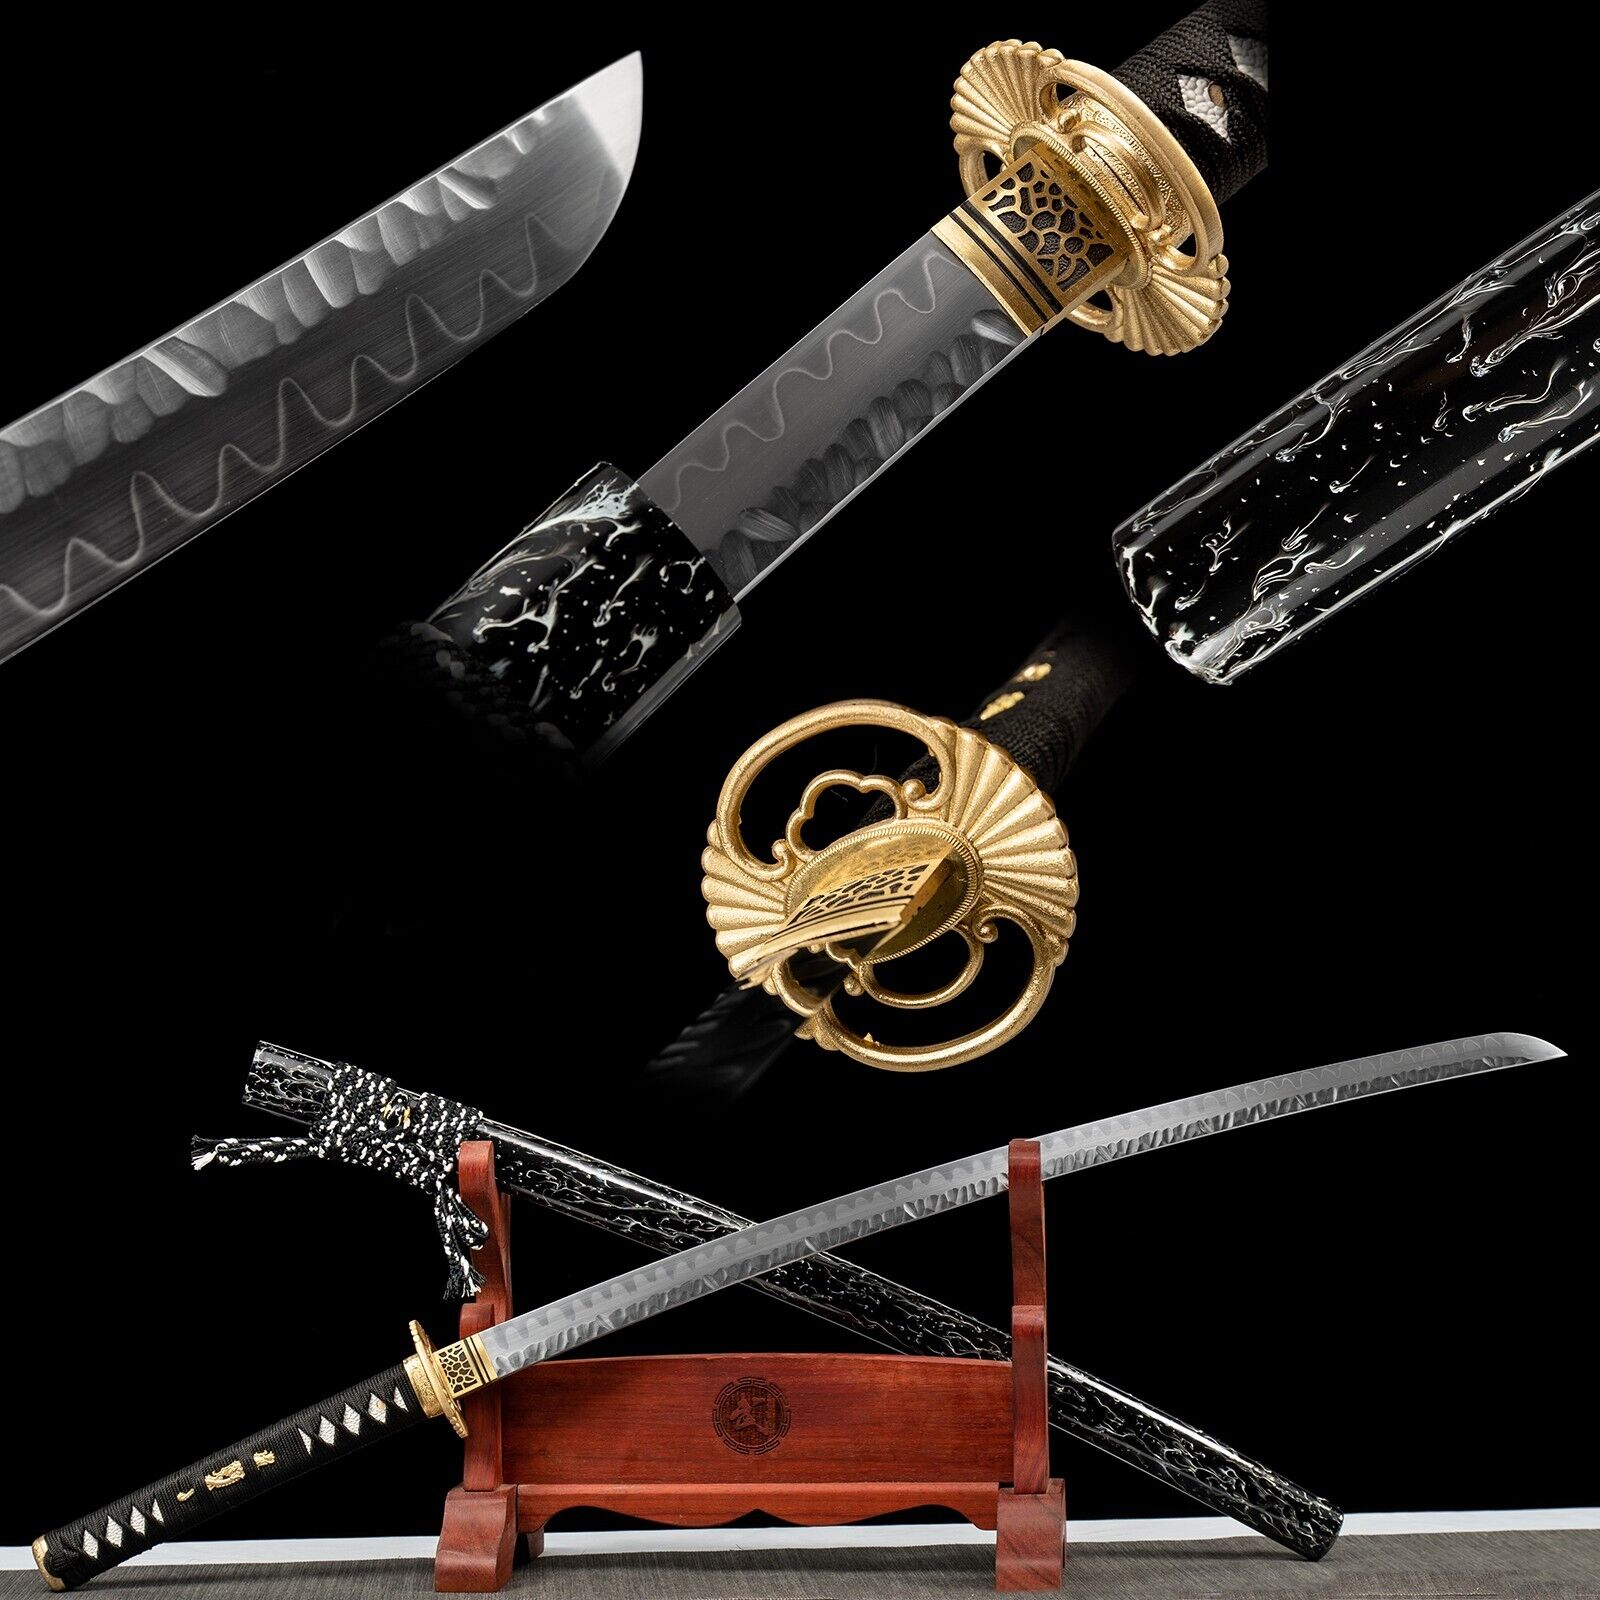 Handmade Japanese Clay Tempered T10 Steel Katana Samurai Sharp Sword Full tang